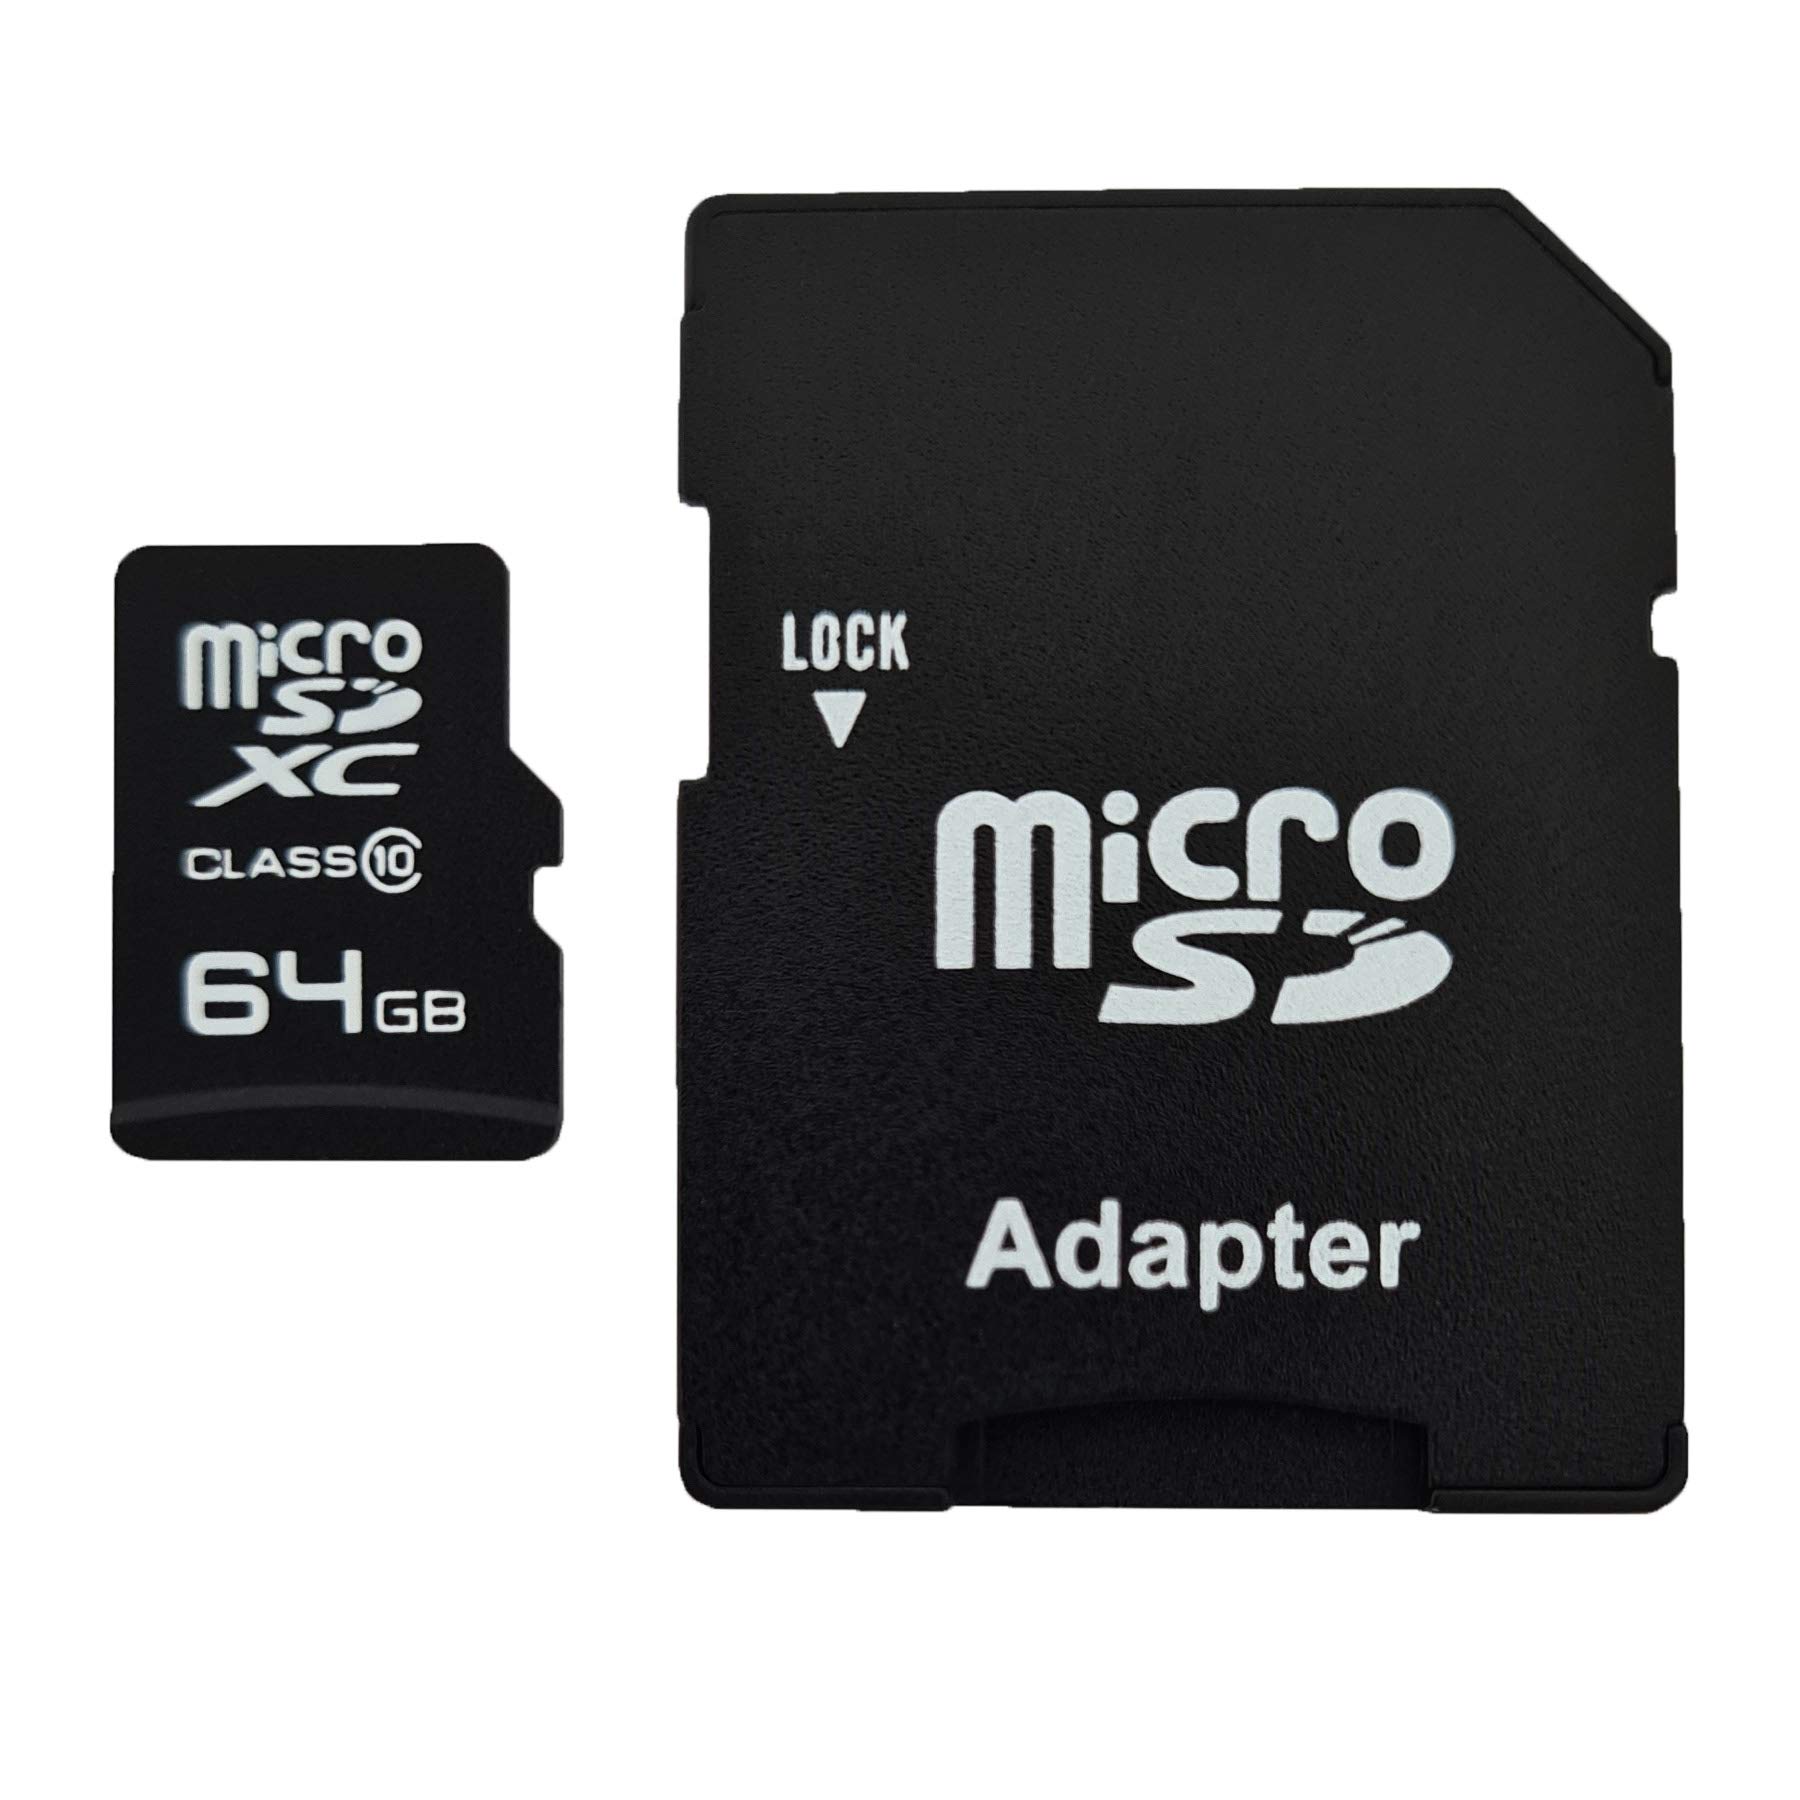 dekoelektropunktde 64GB MicroSDXC Speicherkarte mit Adapter Class 10 kompatibel für Canon PowerShot A460 G15 TX1 S95 SX400